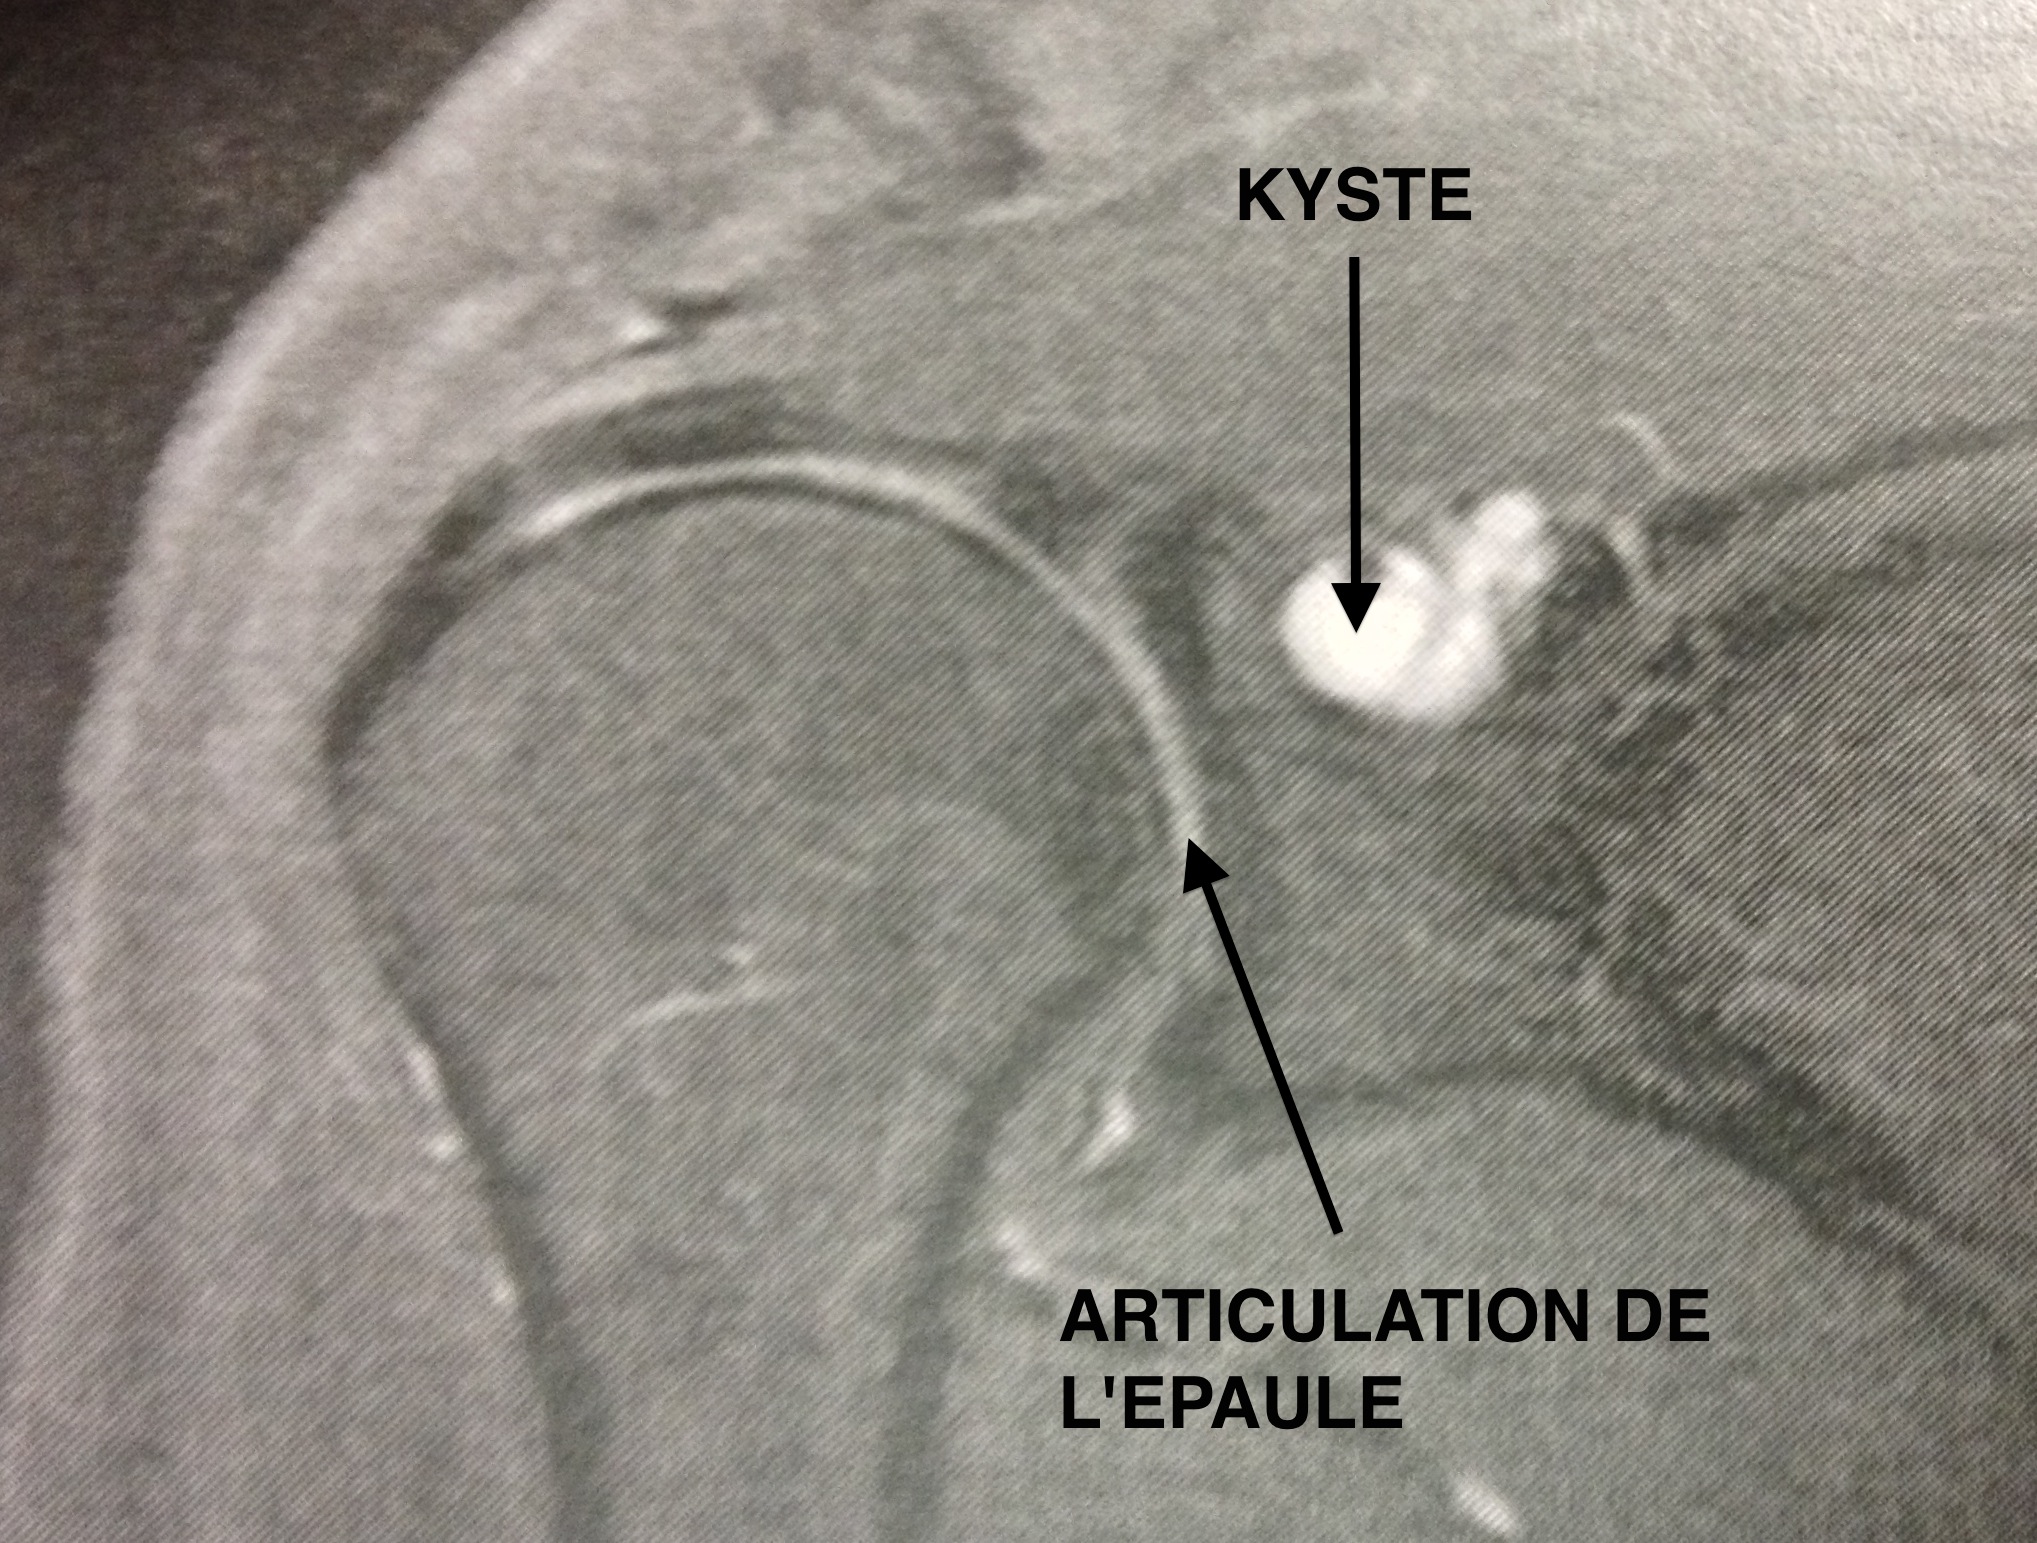 IRM montrant kyste comprimant le nerf supra-scapulaire